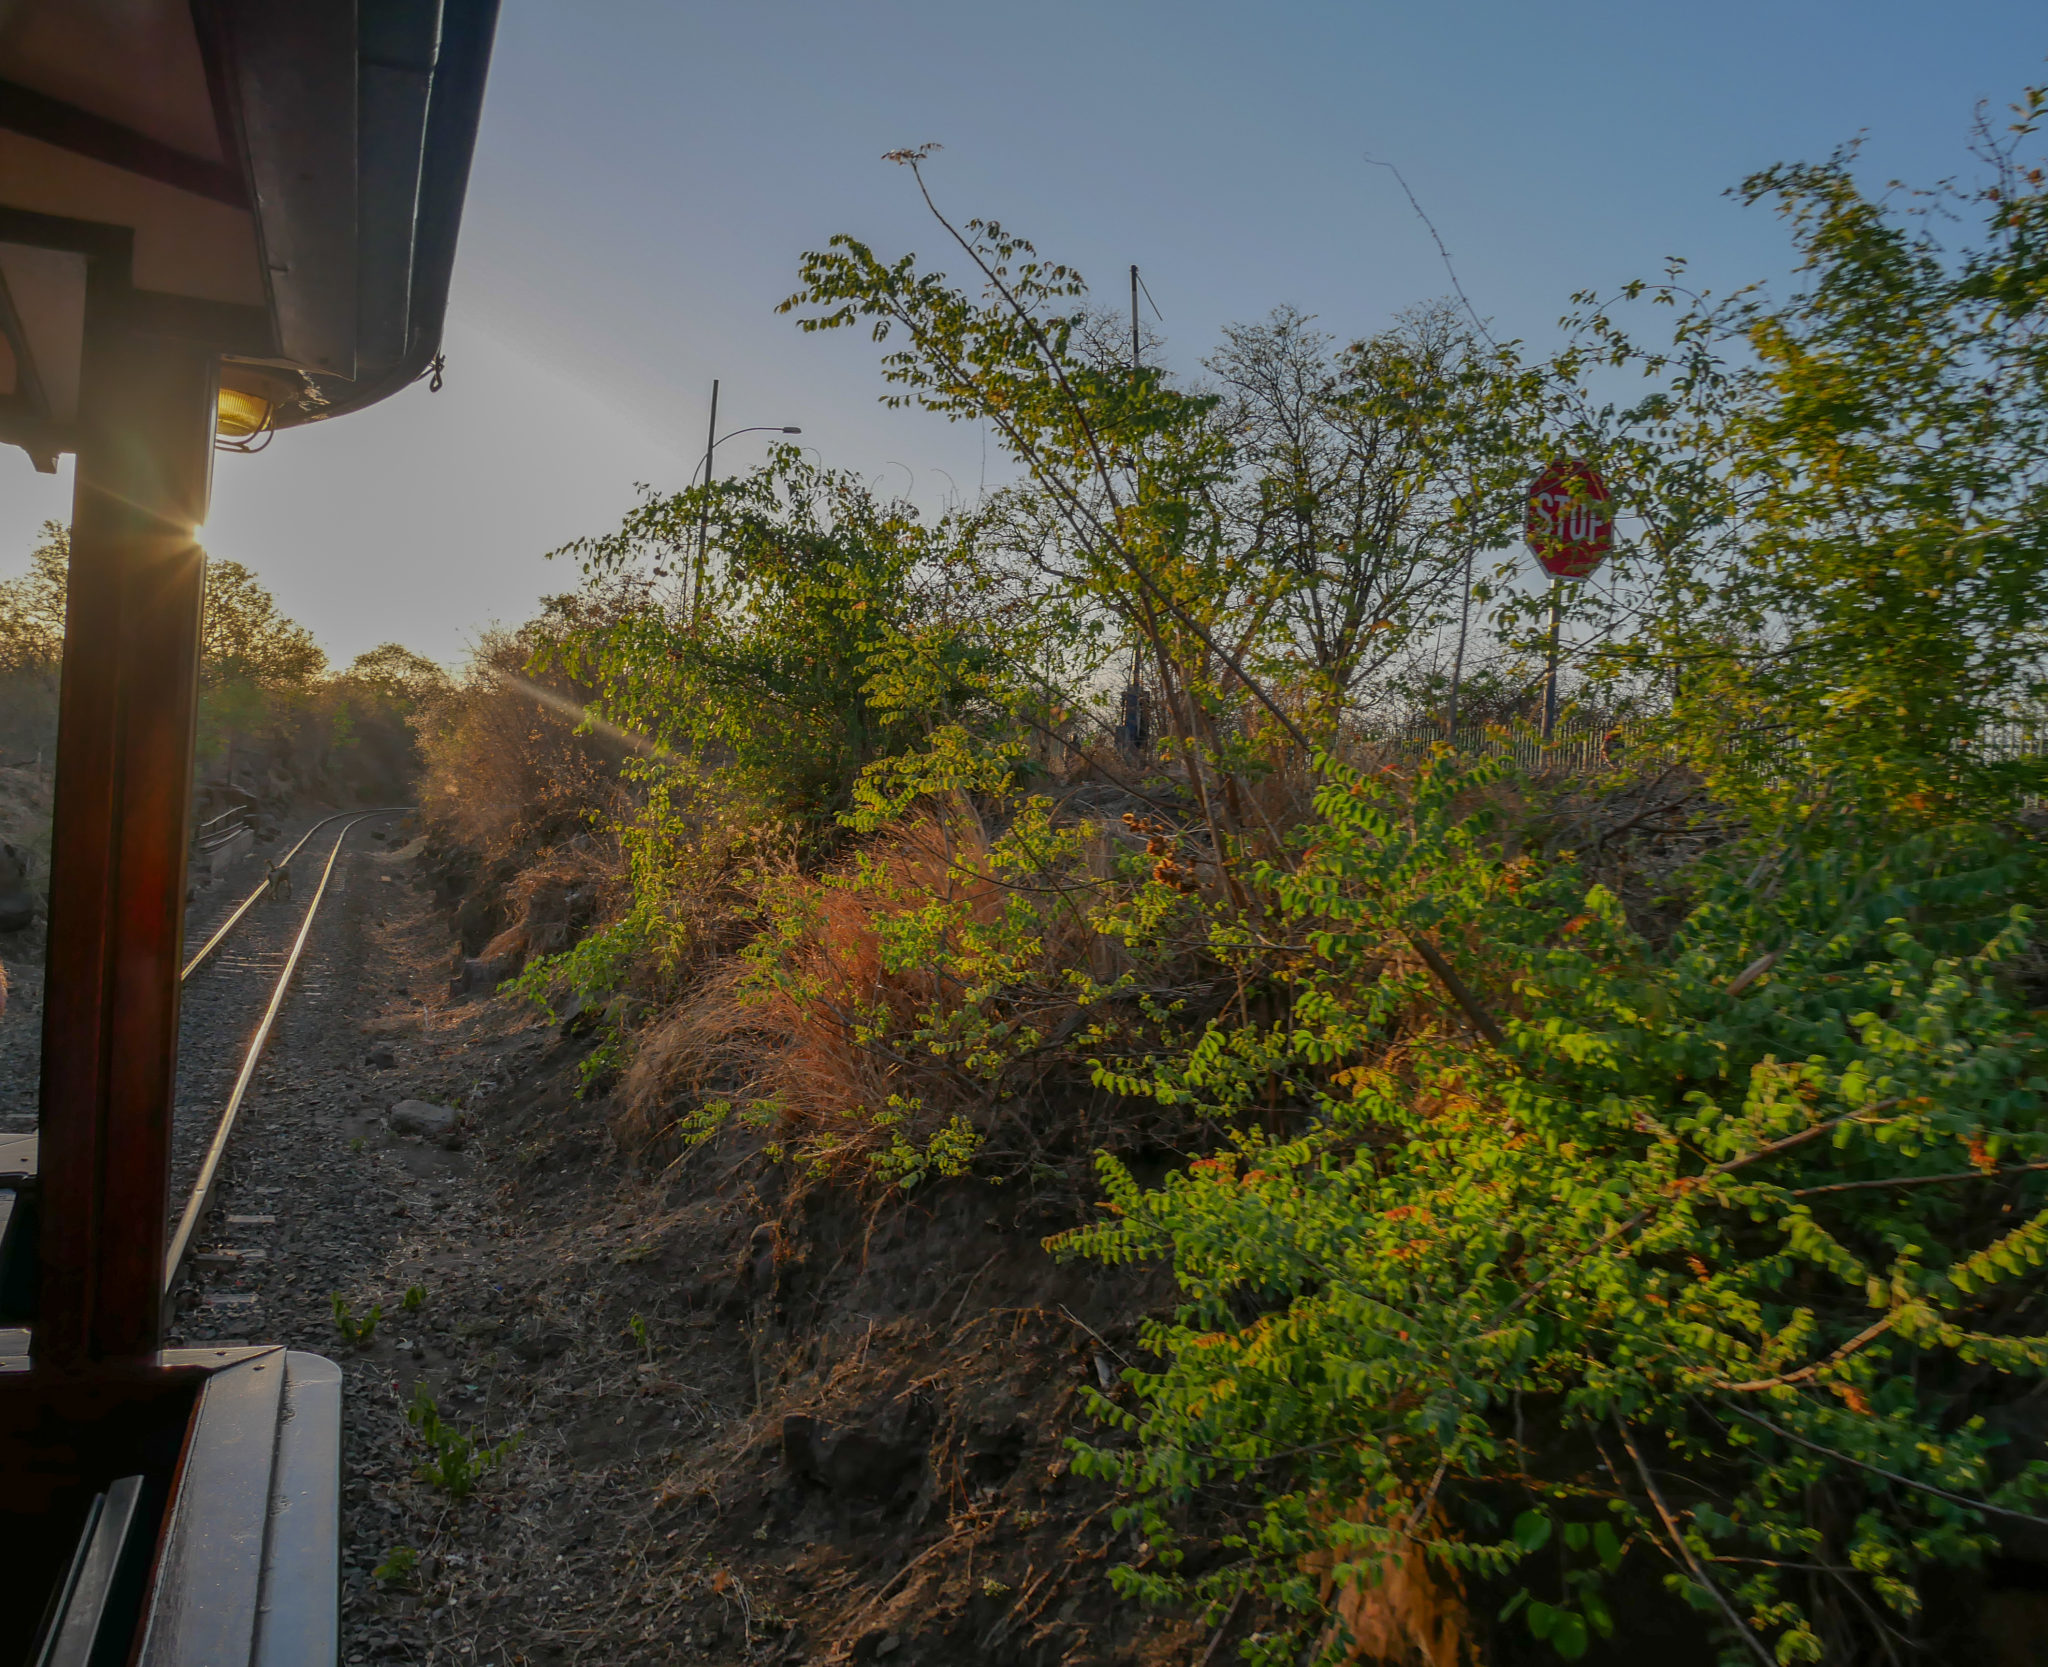 The dry bush alongside the tracks of the Royal Livingstone Express train